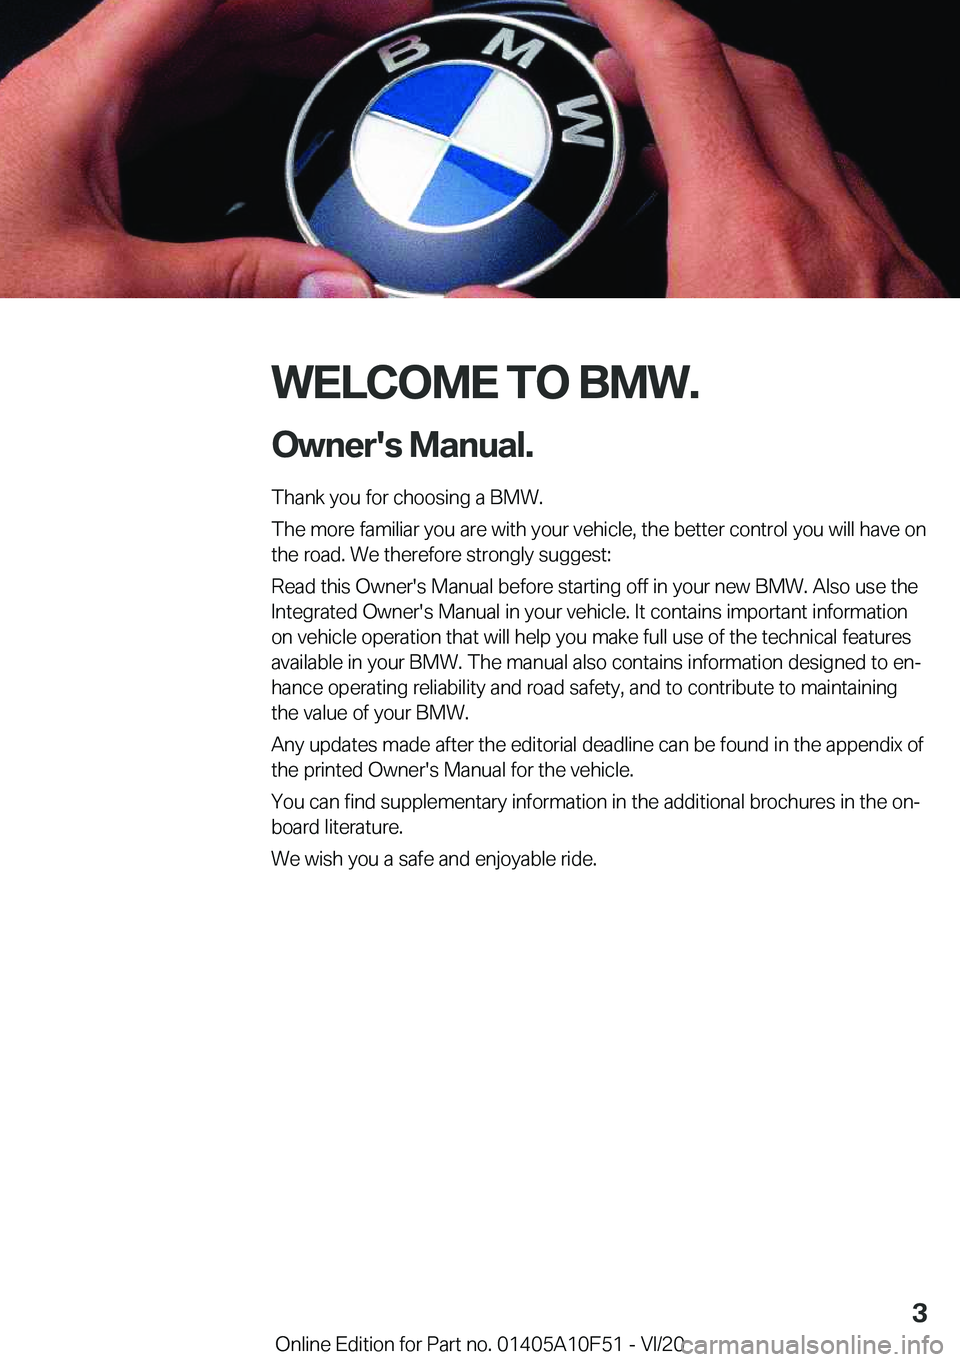 BMW X4 2021  Owners Manual �W�E�L�C�O�M�E��T�O��B�M�W�.�O�w�n�e�r�'�s��M�a�n�u�a�l�.
�T�h�a�n�k��y�o�u��f�o�r��c�h�o�o�s�i�n�g��a��B�M�W�.
�T�h�e��m�o�r�e��f�a�m�i�l�i�a�r��y�o�u��a�r�e��w�i�t�h��y�o�u�r��v�e